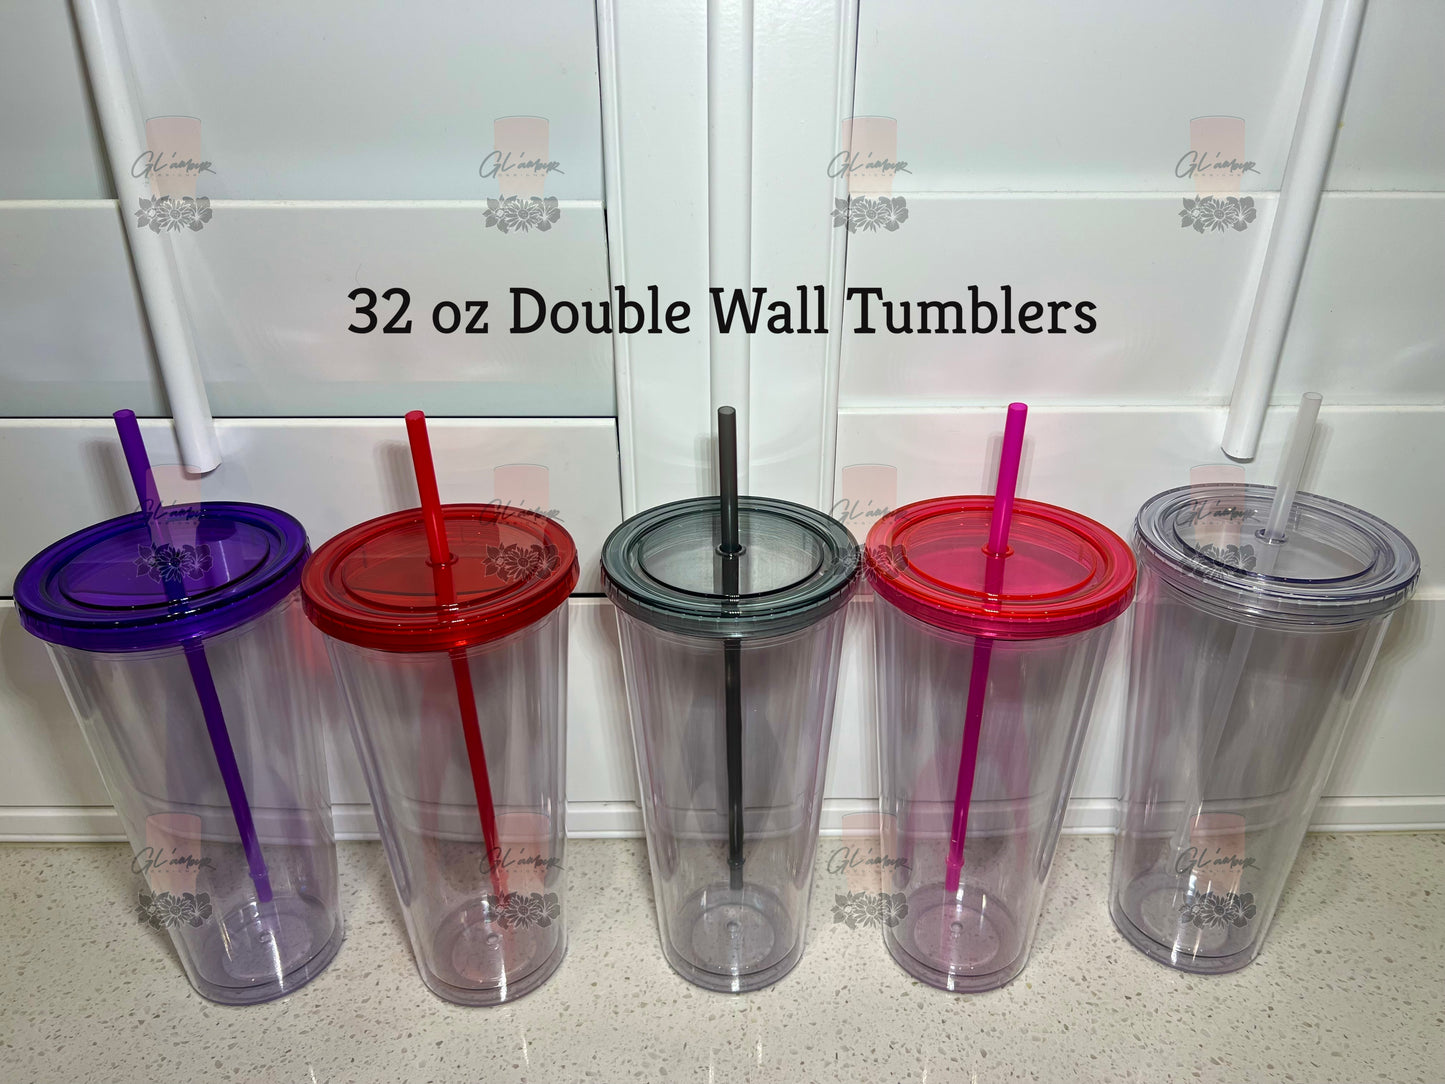 32 oz Double Wall Tumblers